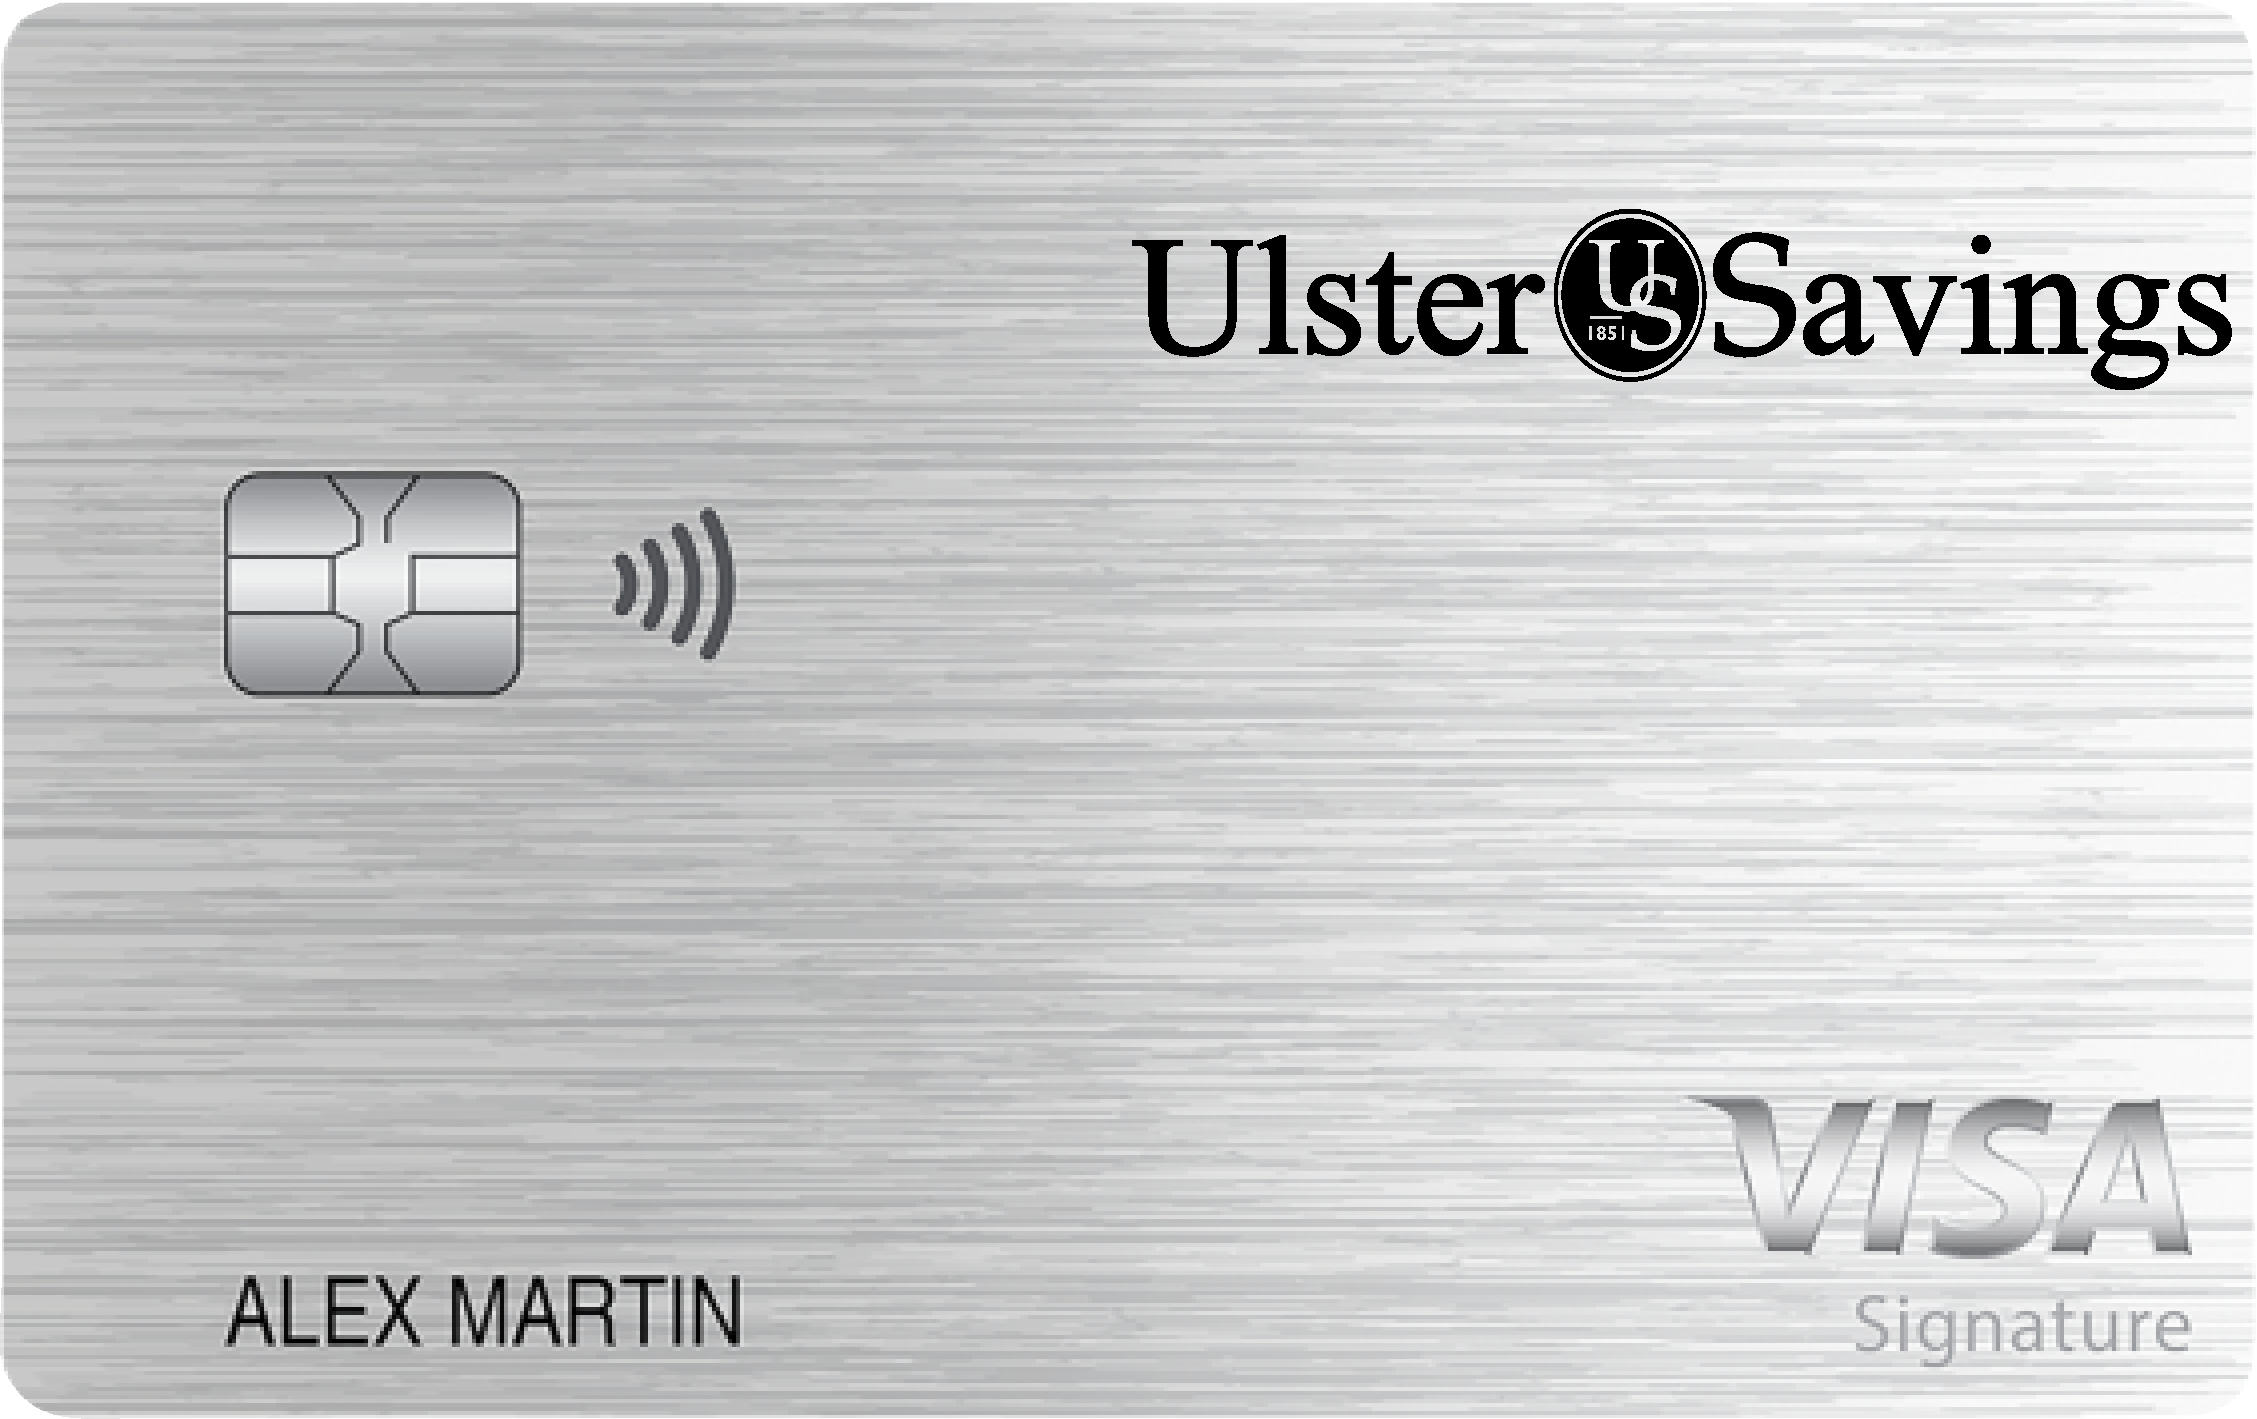 Ulster Savings Bank Everyday Rewards+ Card